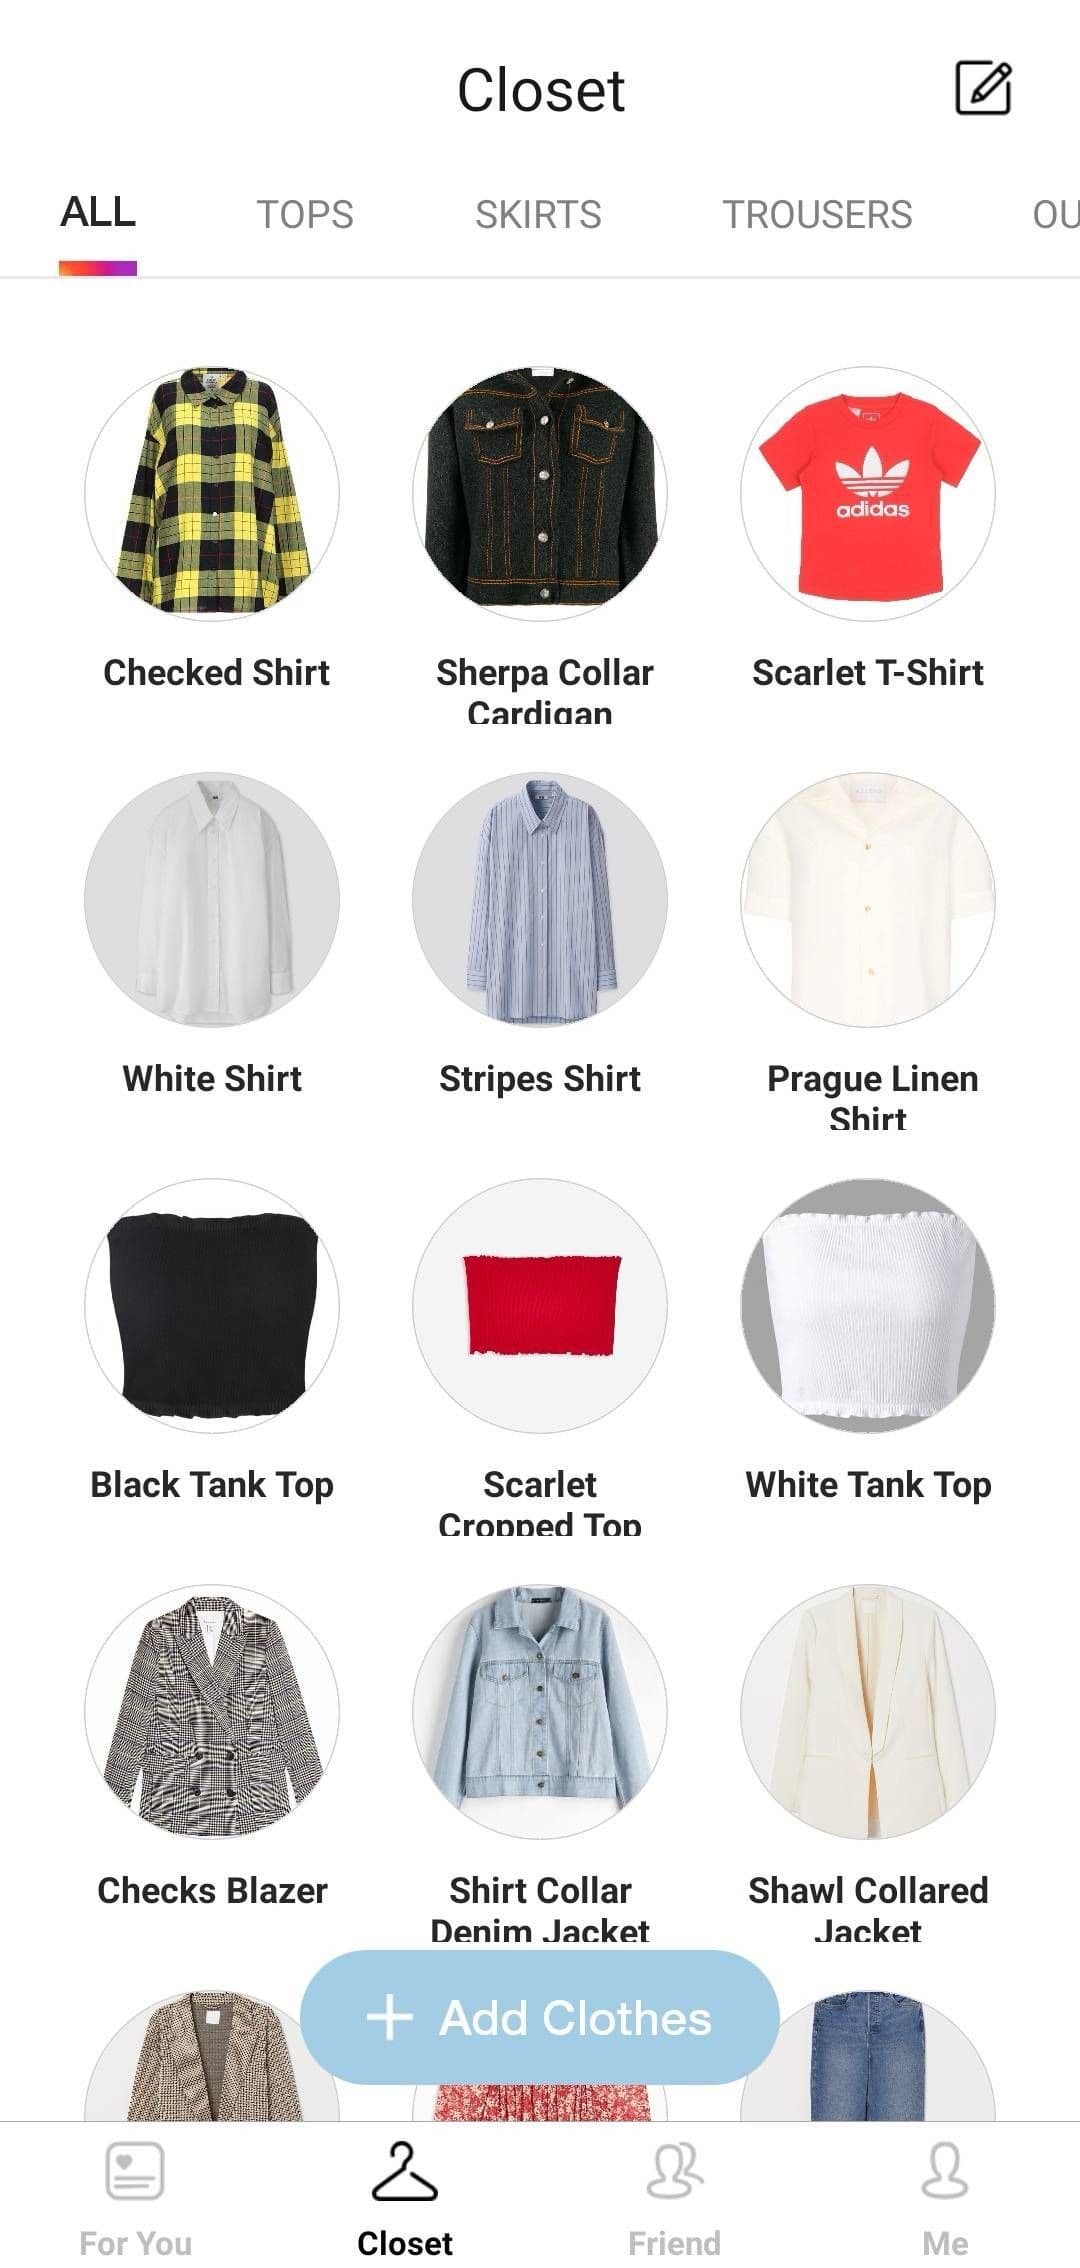 Items in user's digital closet.